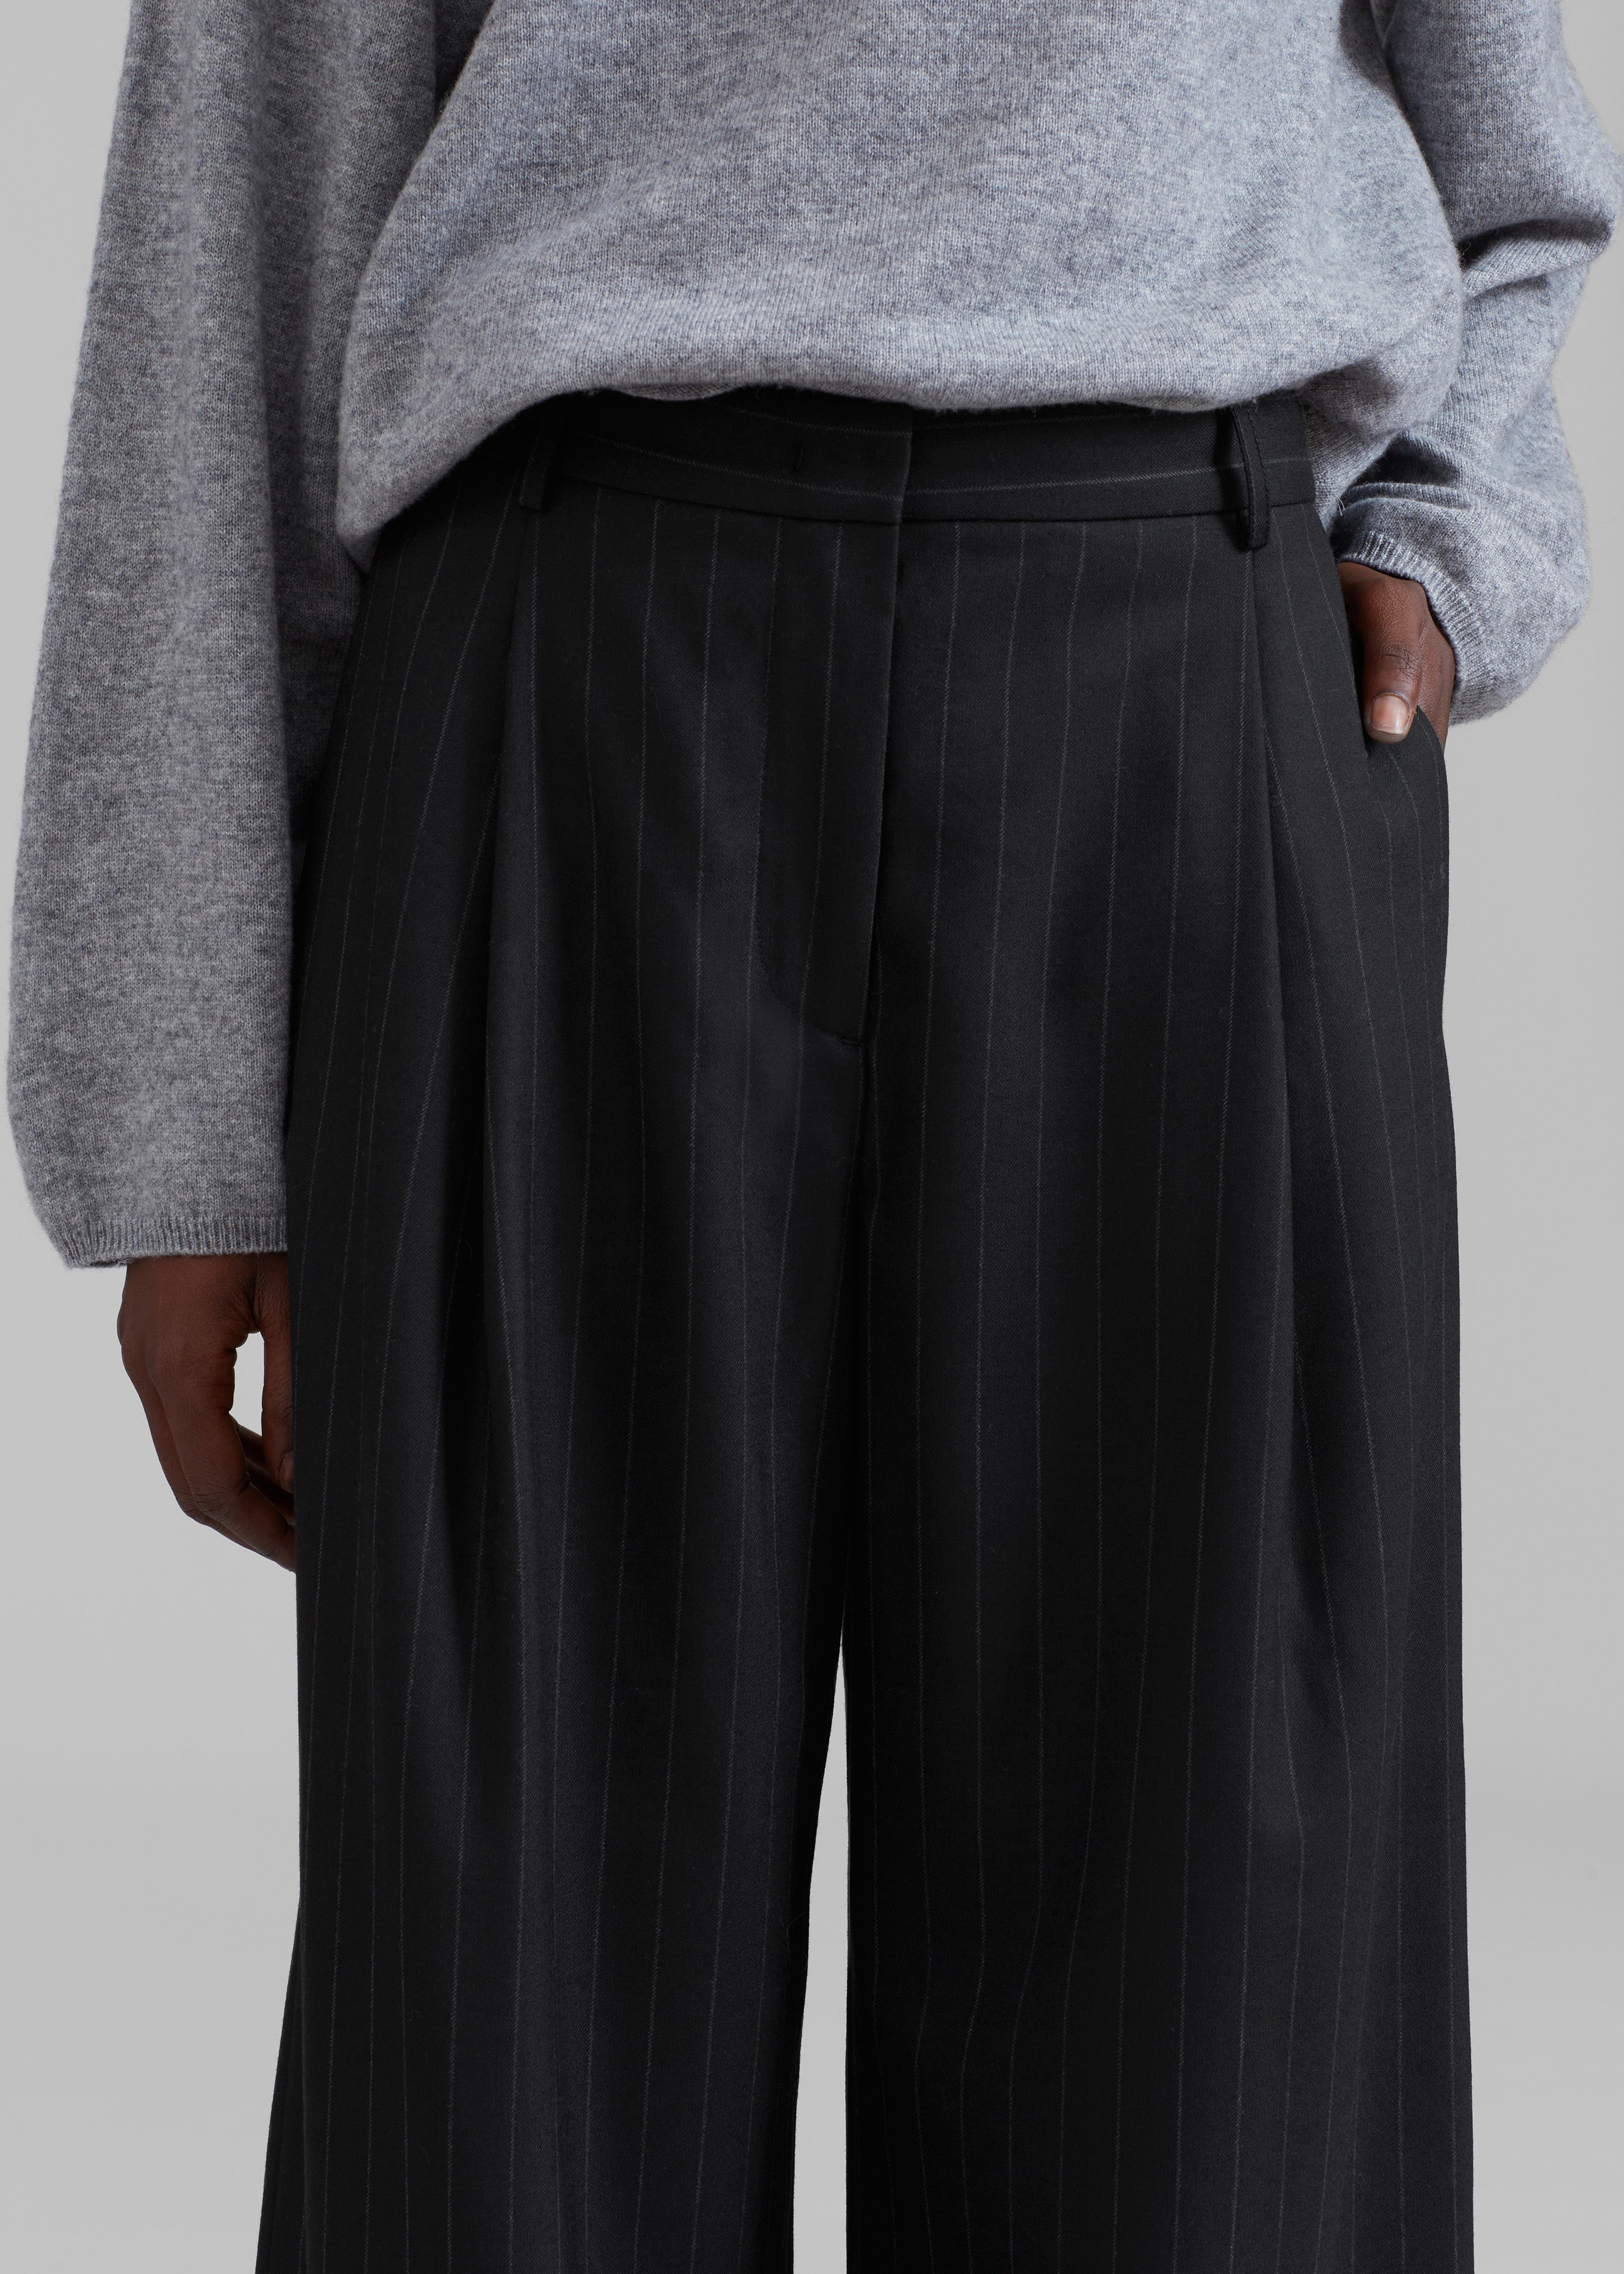 The Garment Chicago Pants - Black Pinstripe - 3